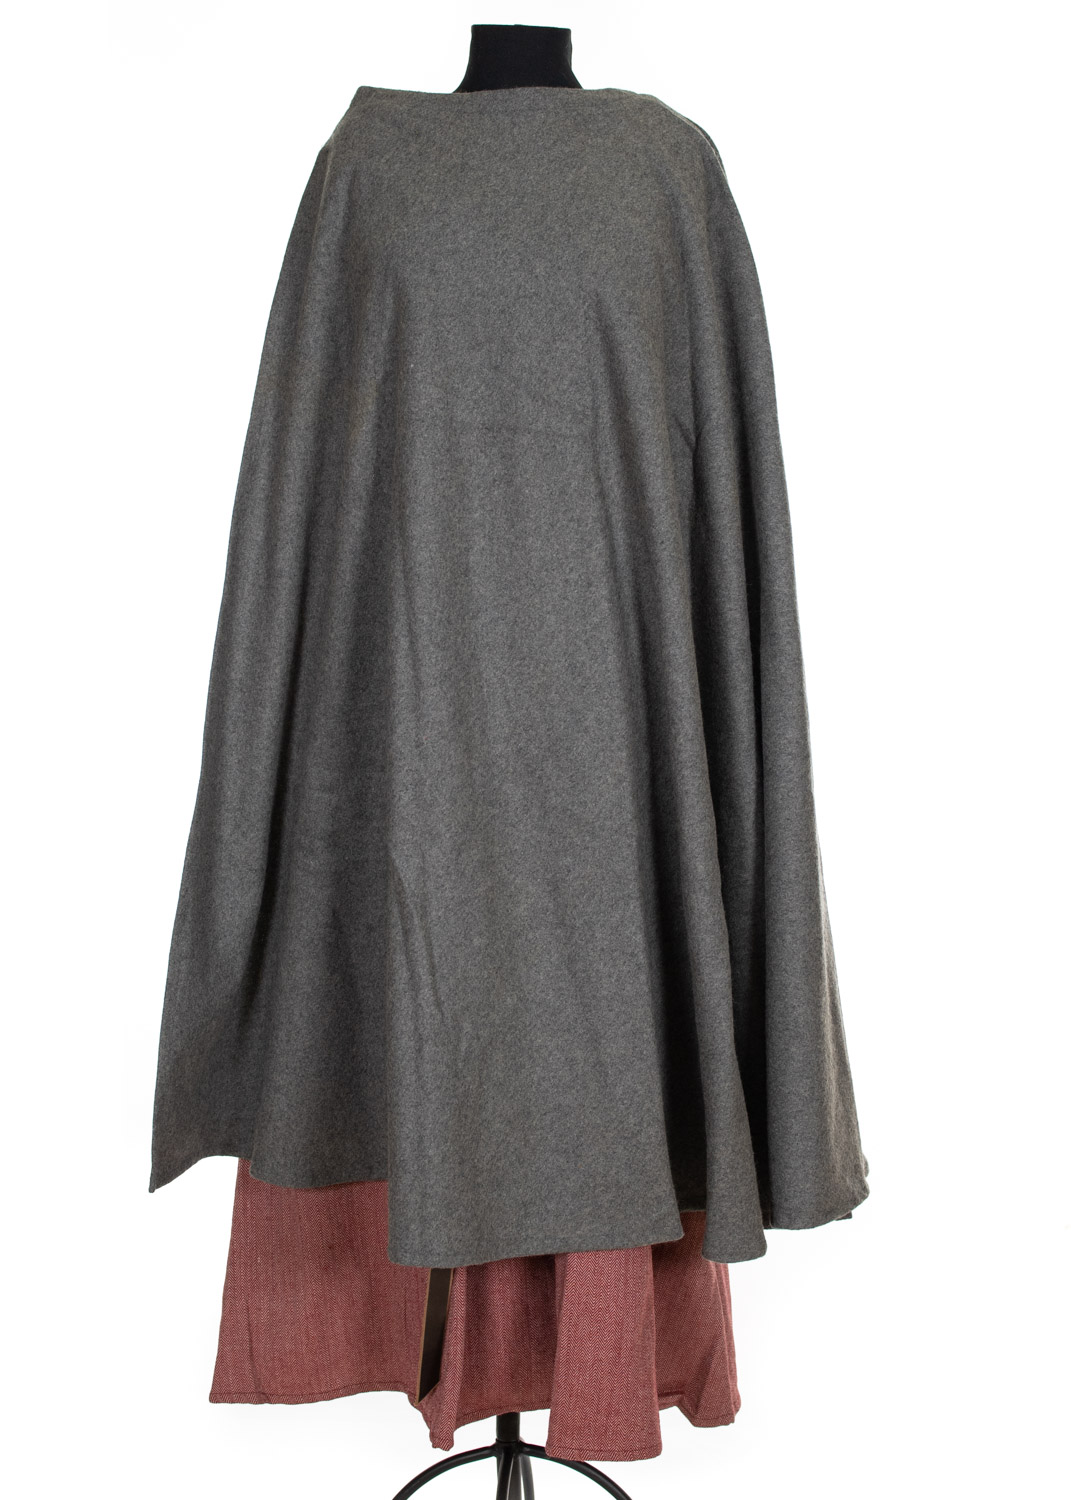 Half circlular cape in grey wool